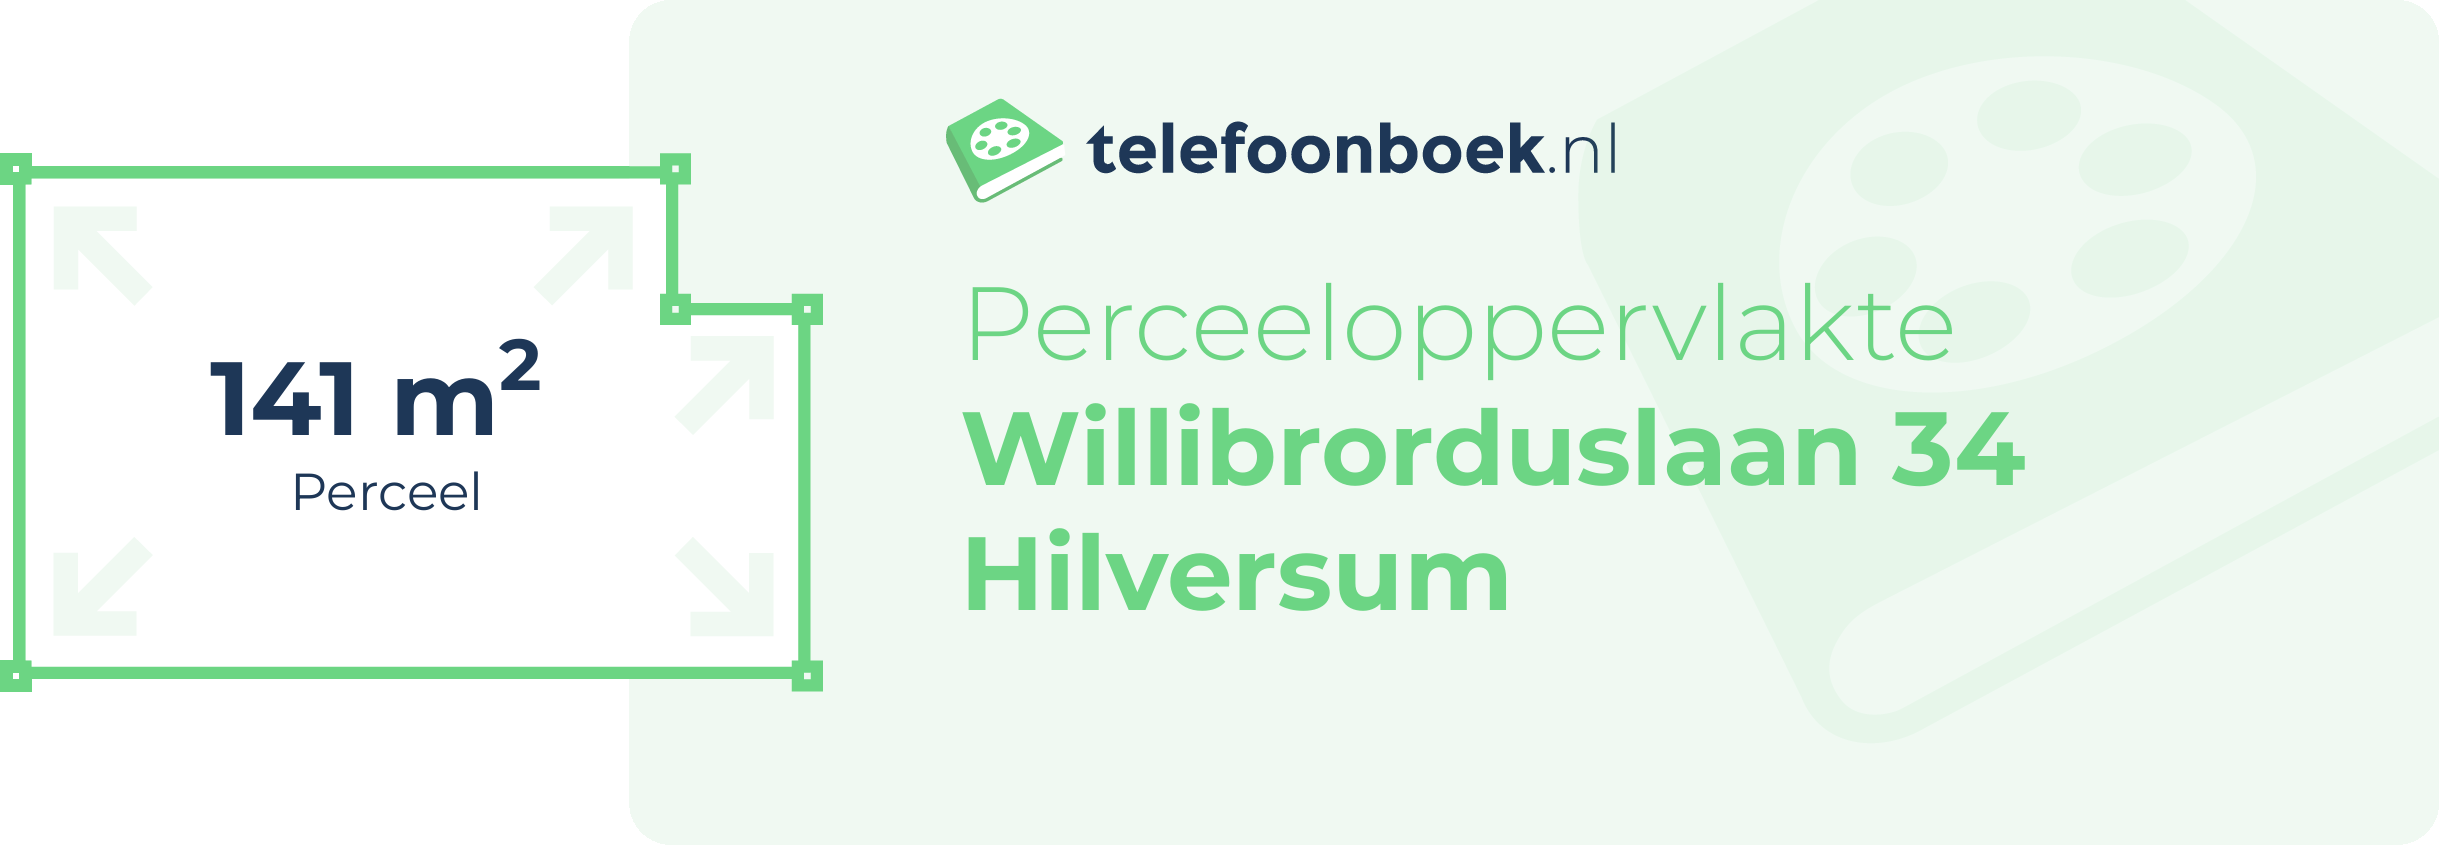 Perceeloppervlakte Willibrorduslaan 34 Hilversum